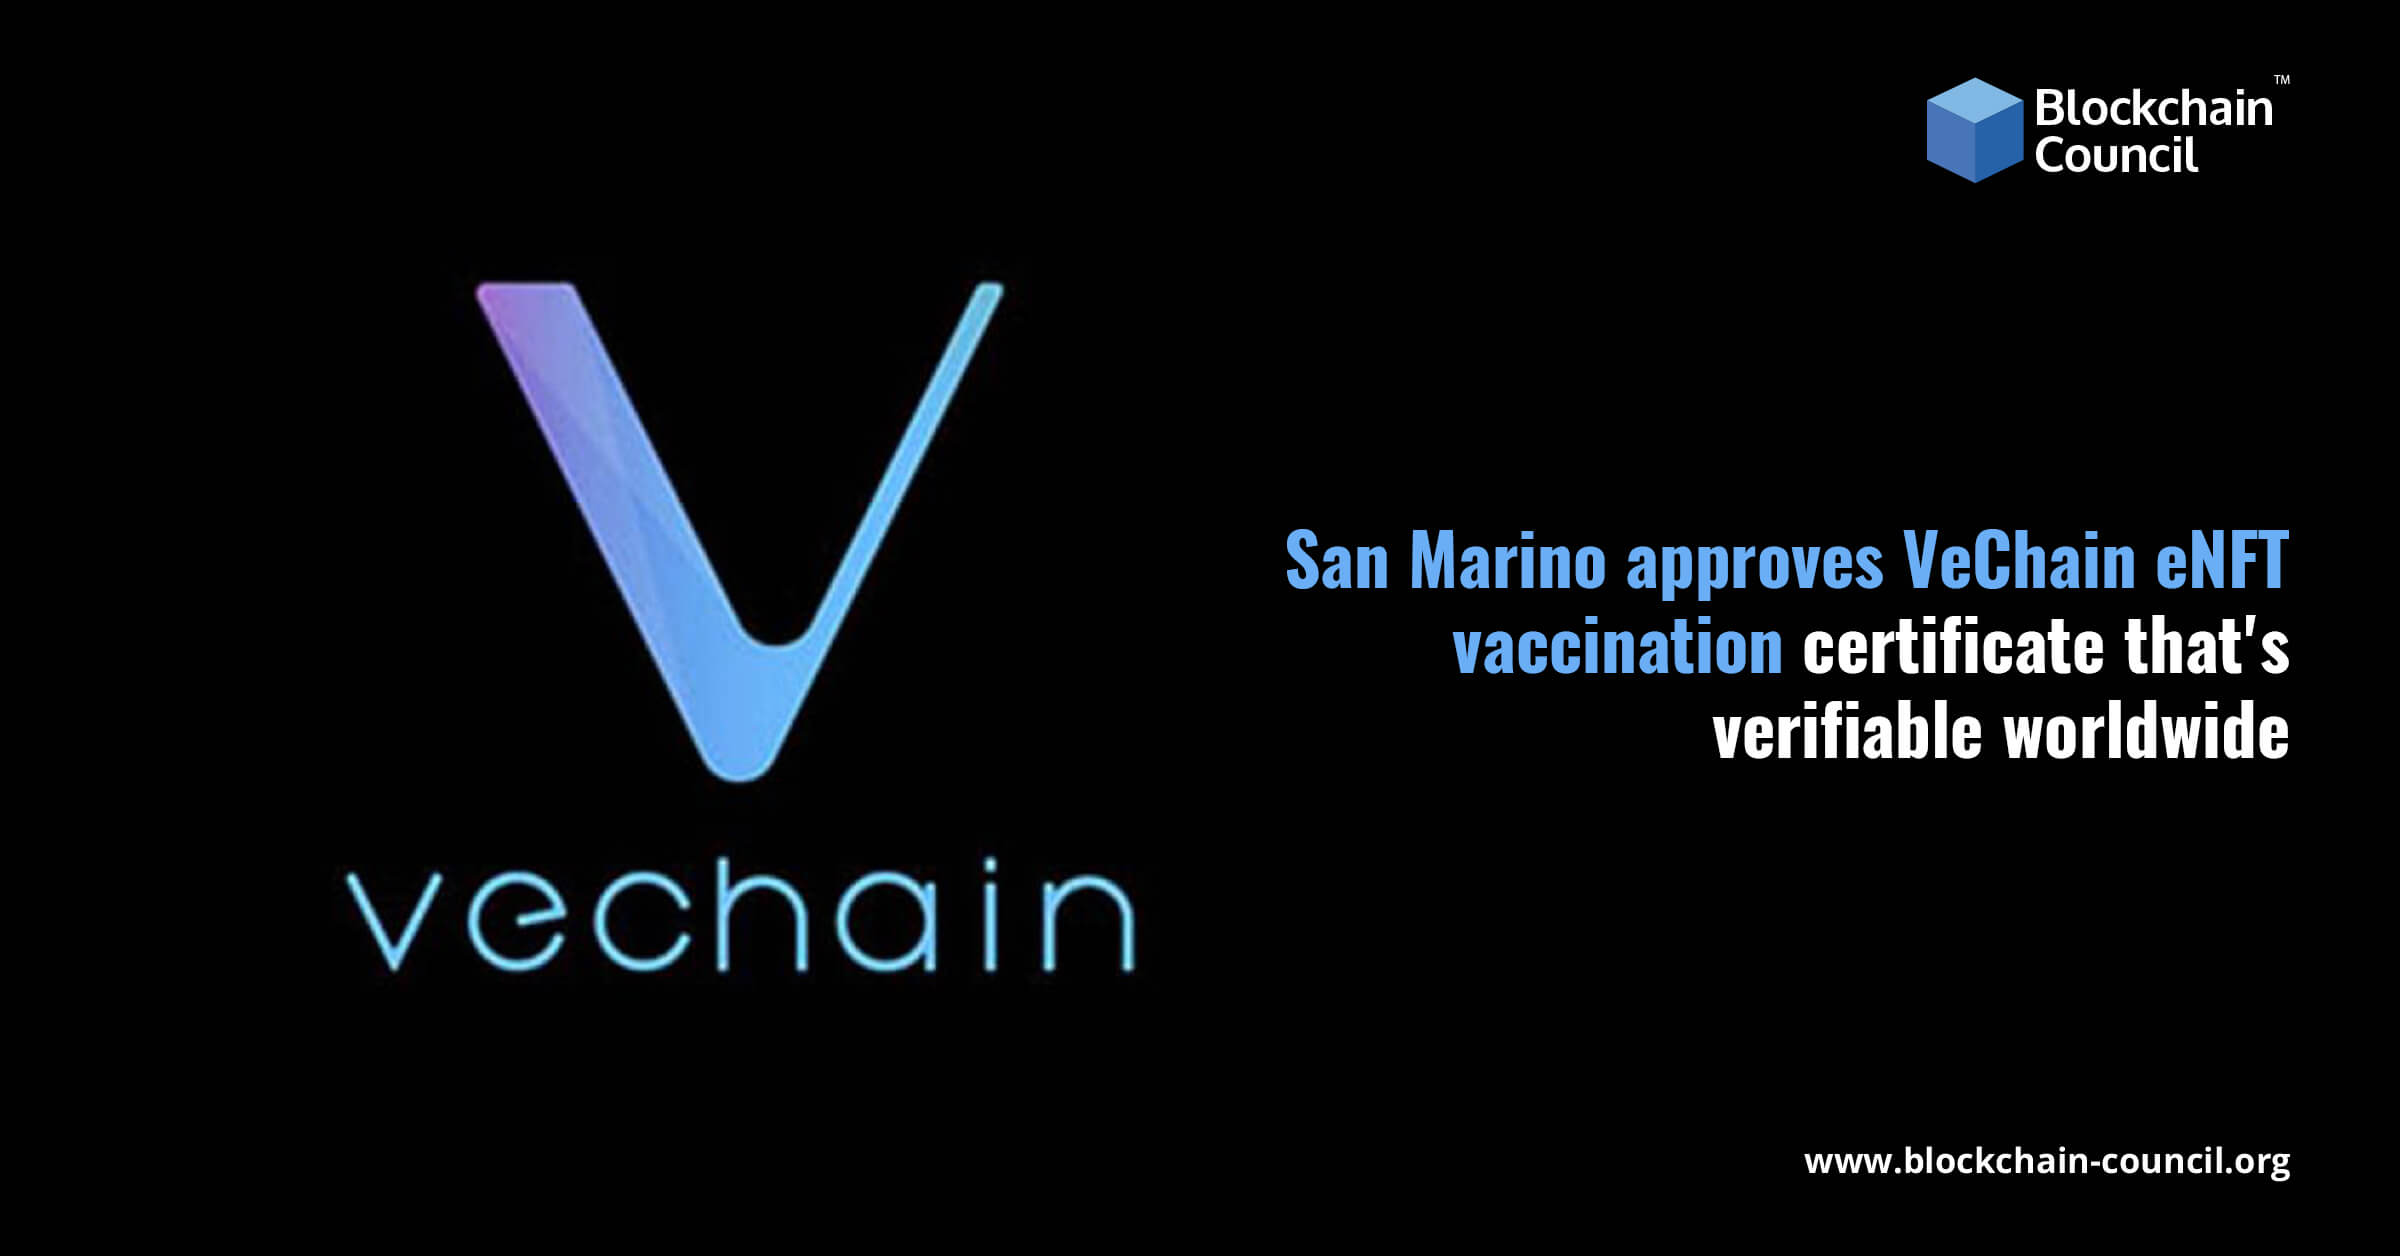 San Marino accepts worldwide verifiable VeChain’s eNFT vaccination certificate